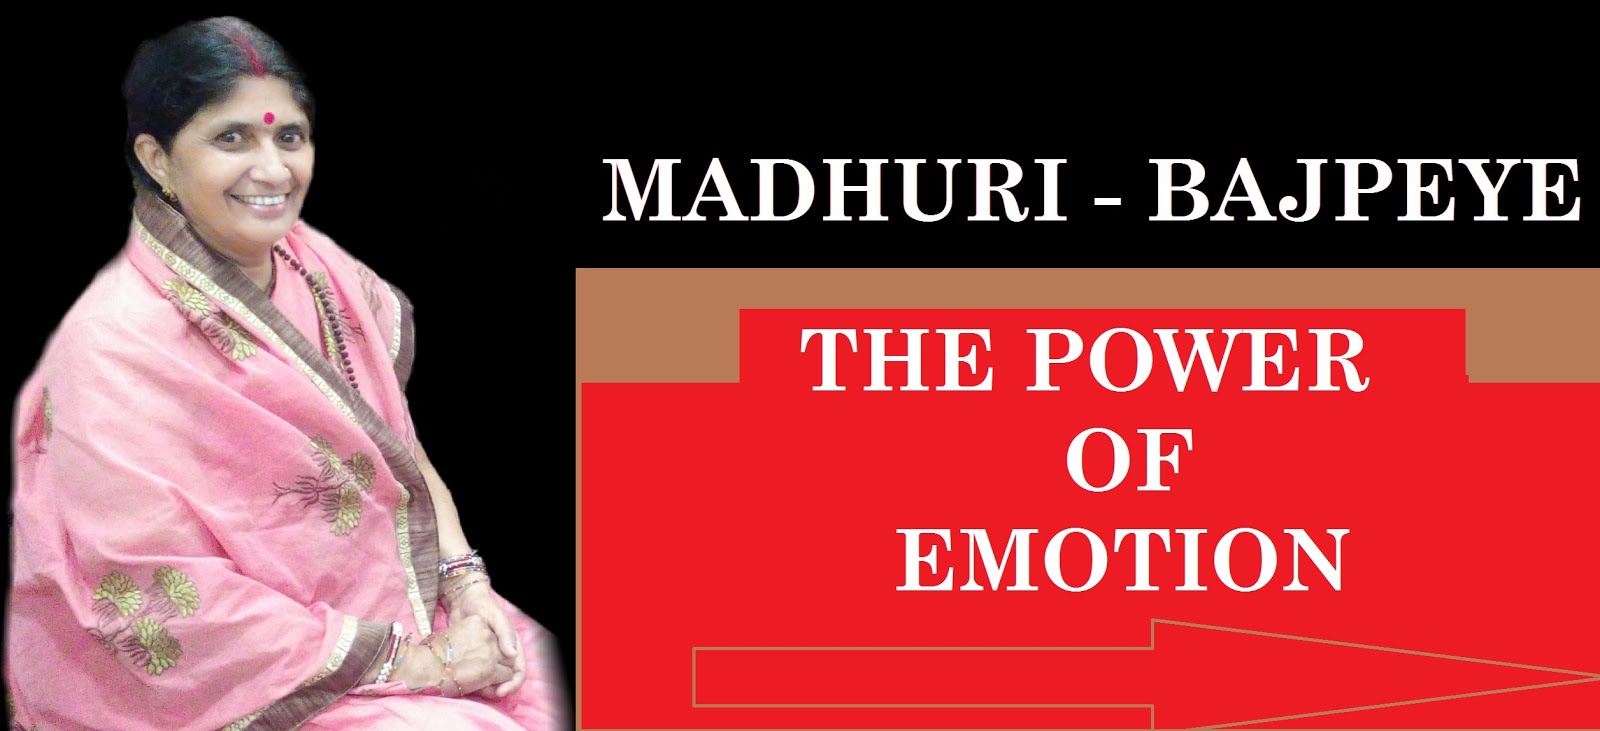 भाव की शक्ति (The Power Of Emotion)love,motivation,madhuri bajpai,story,poem,ayurved